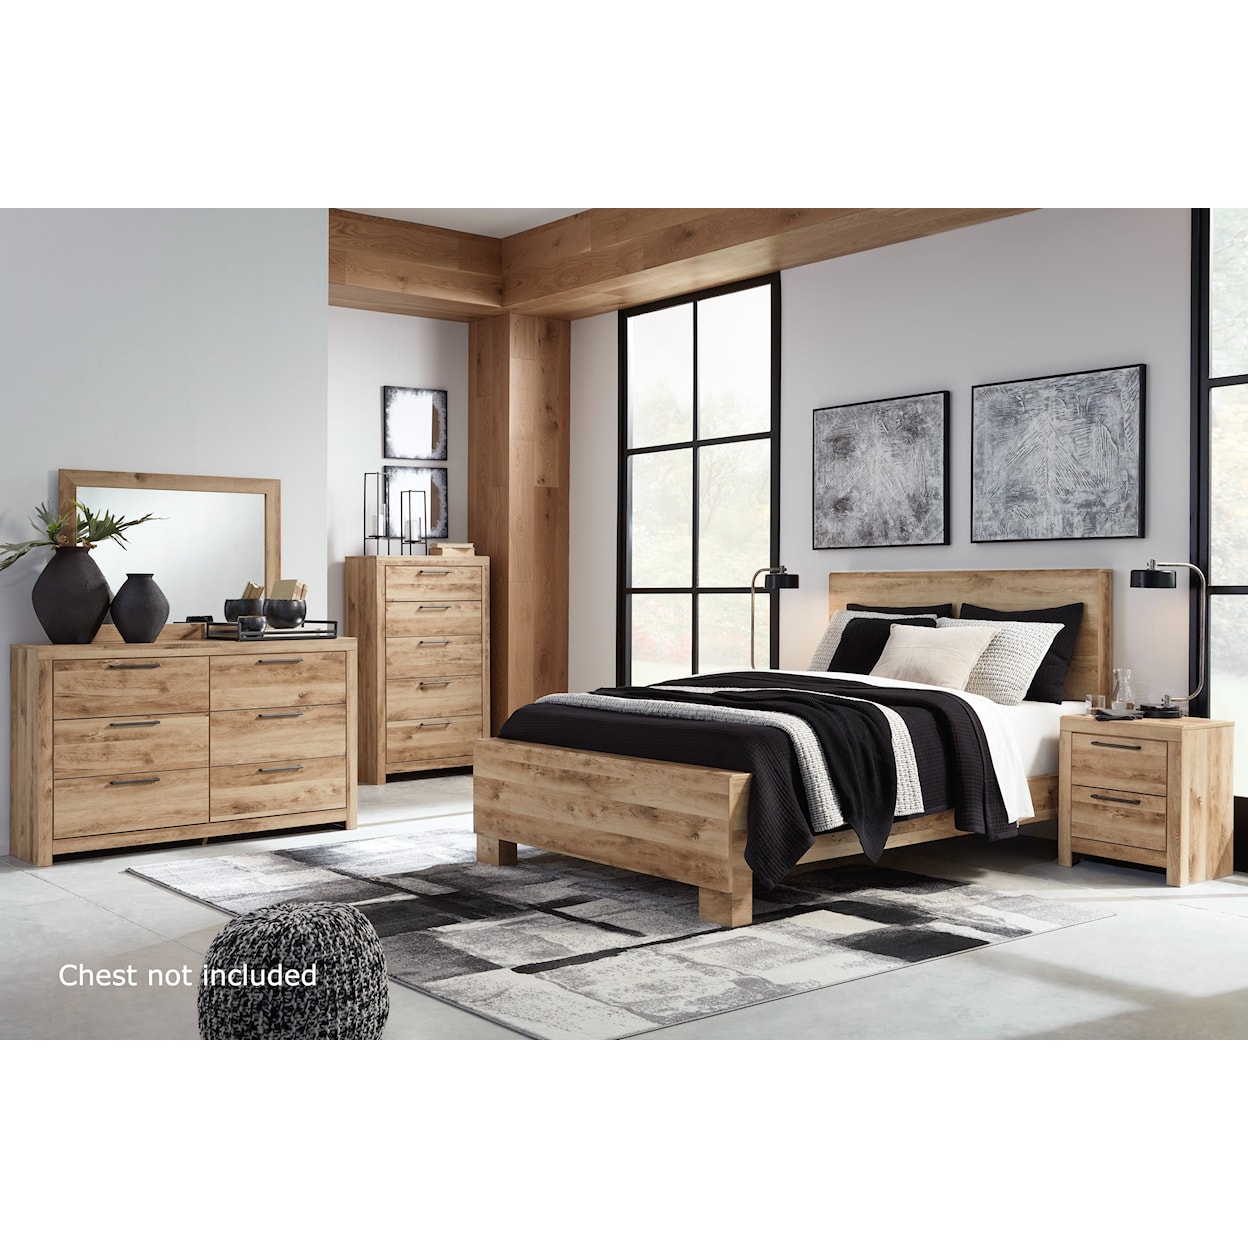 Ashley Furniture Signature Design Hyanna Queen Bedroom Set